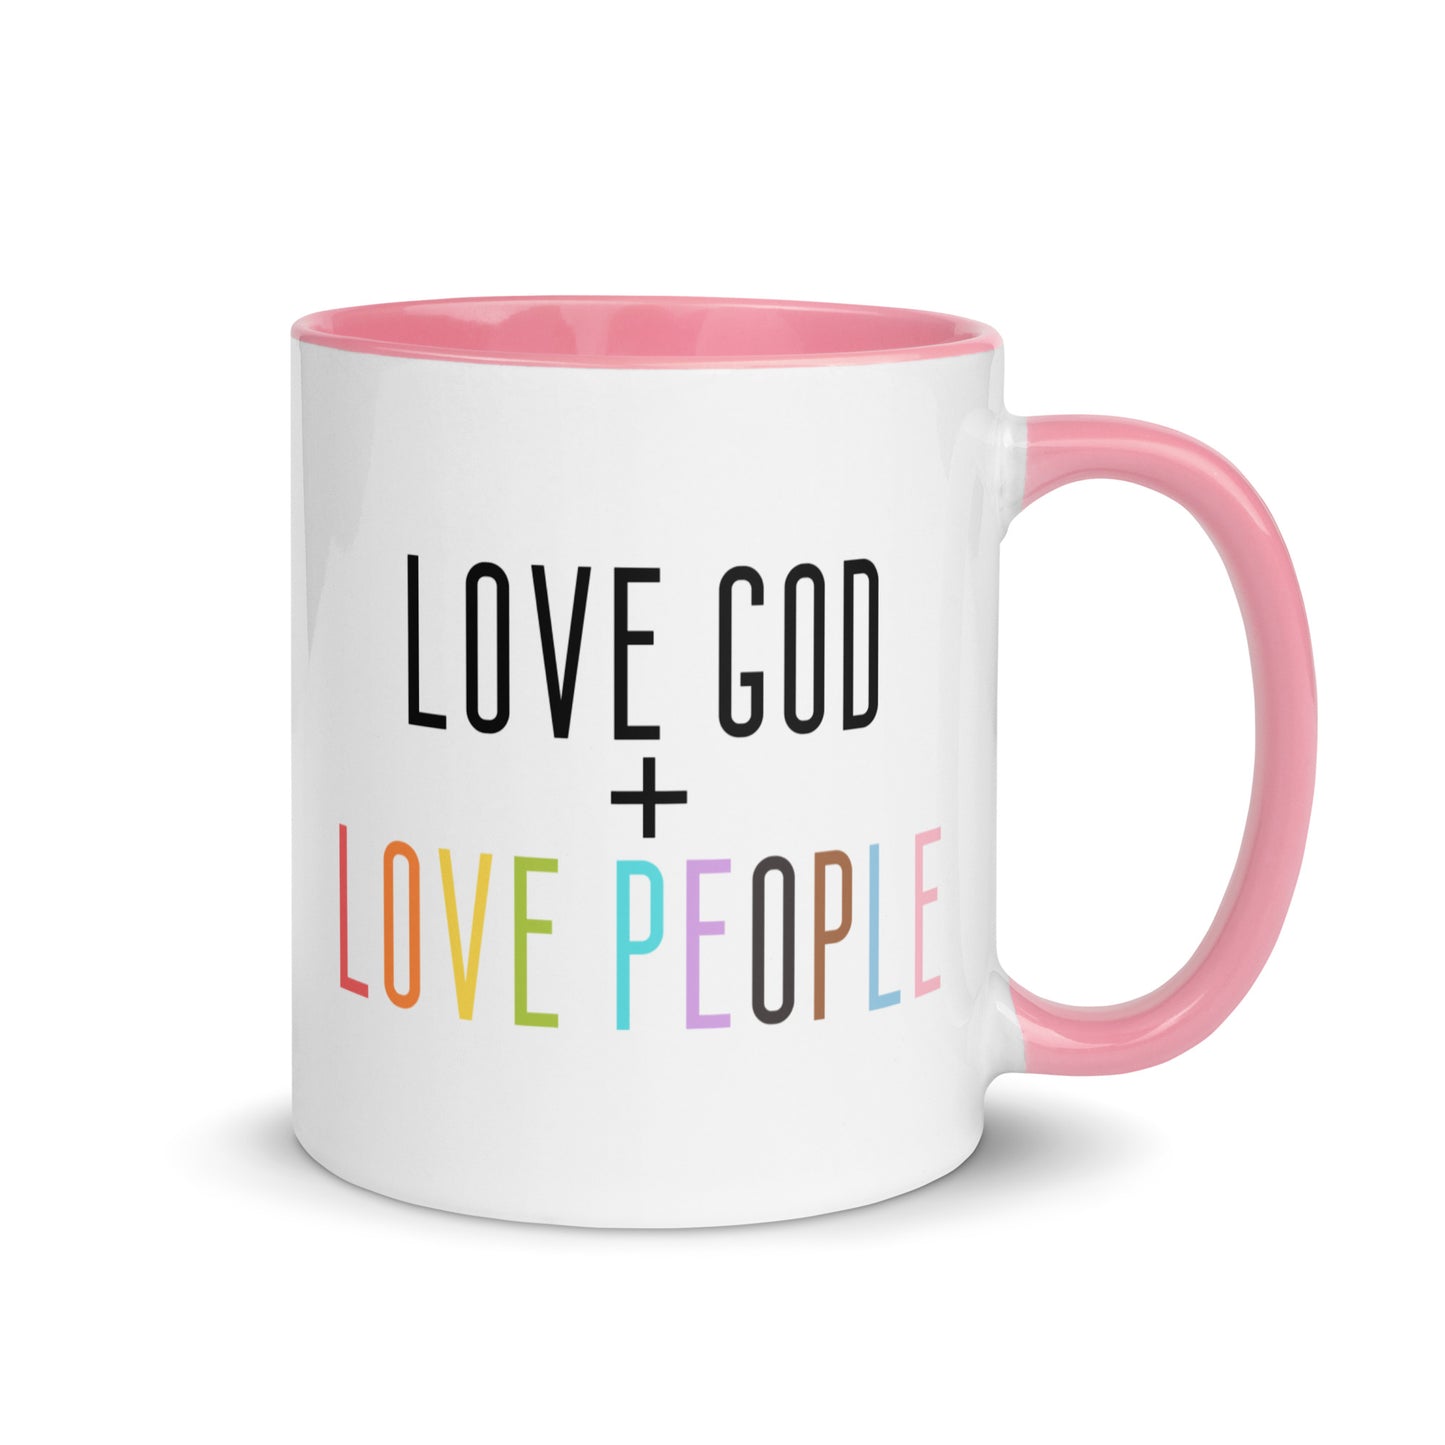 Love God + Love People Mug